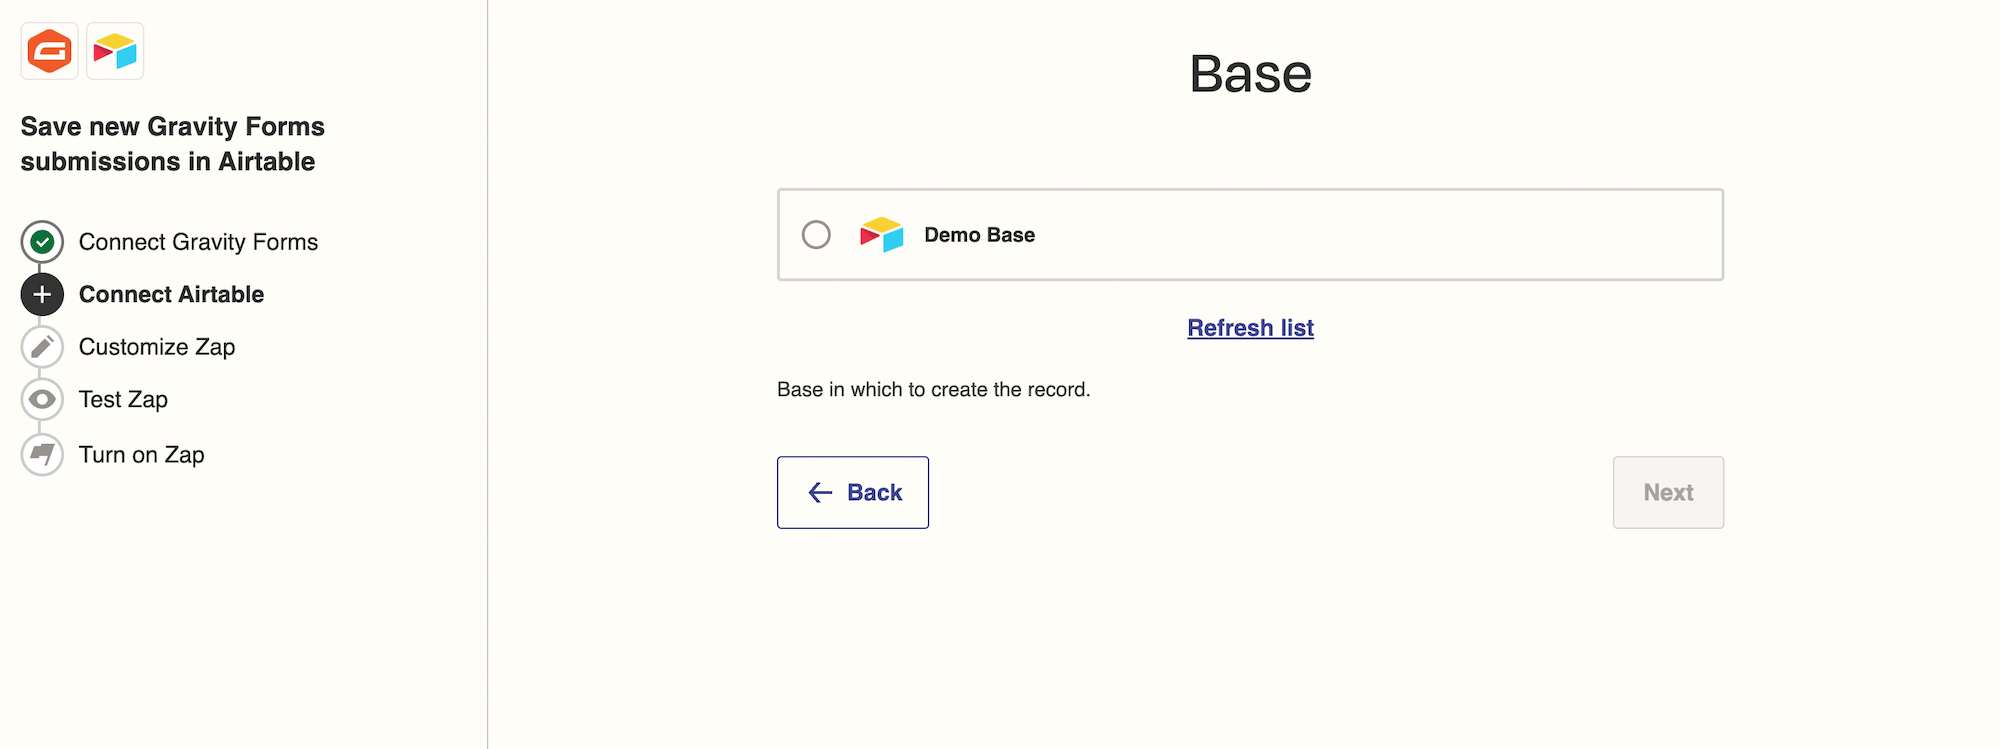 Choosing a base